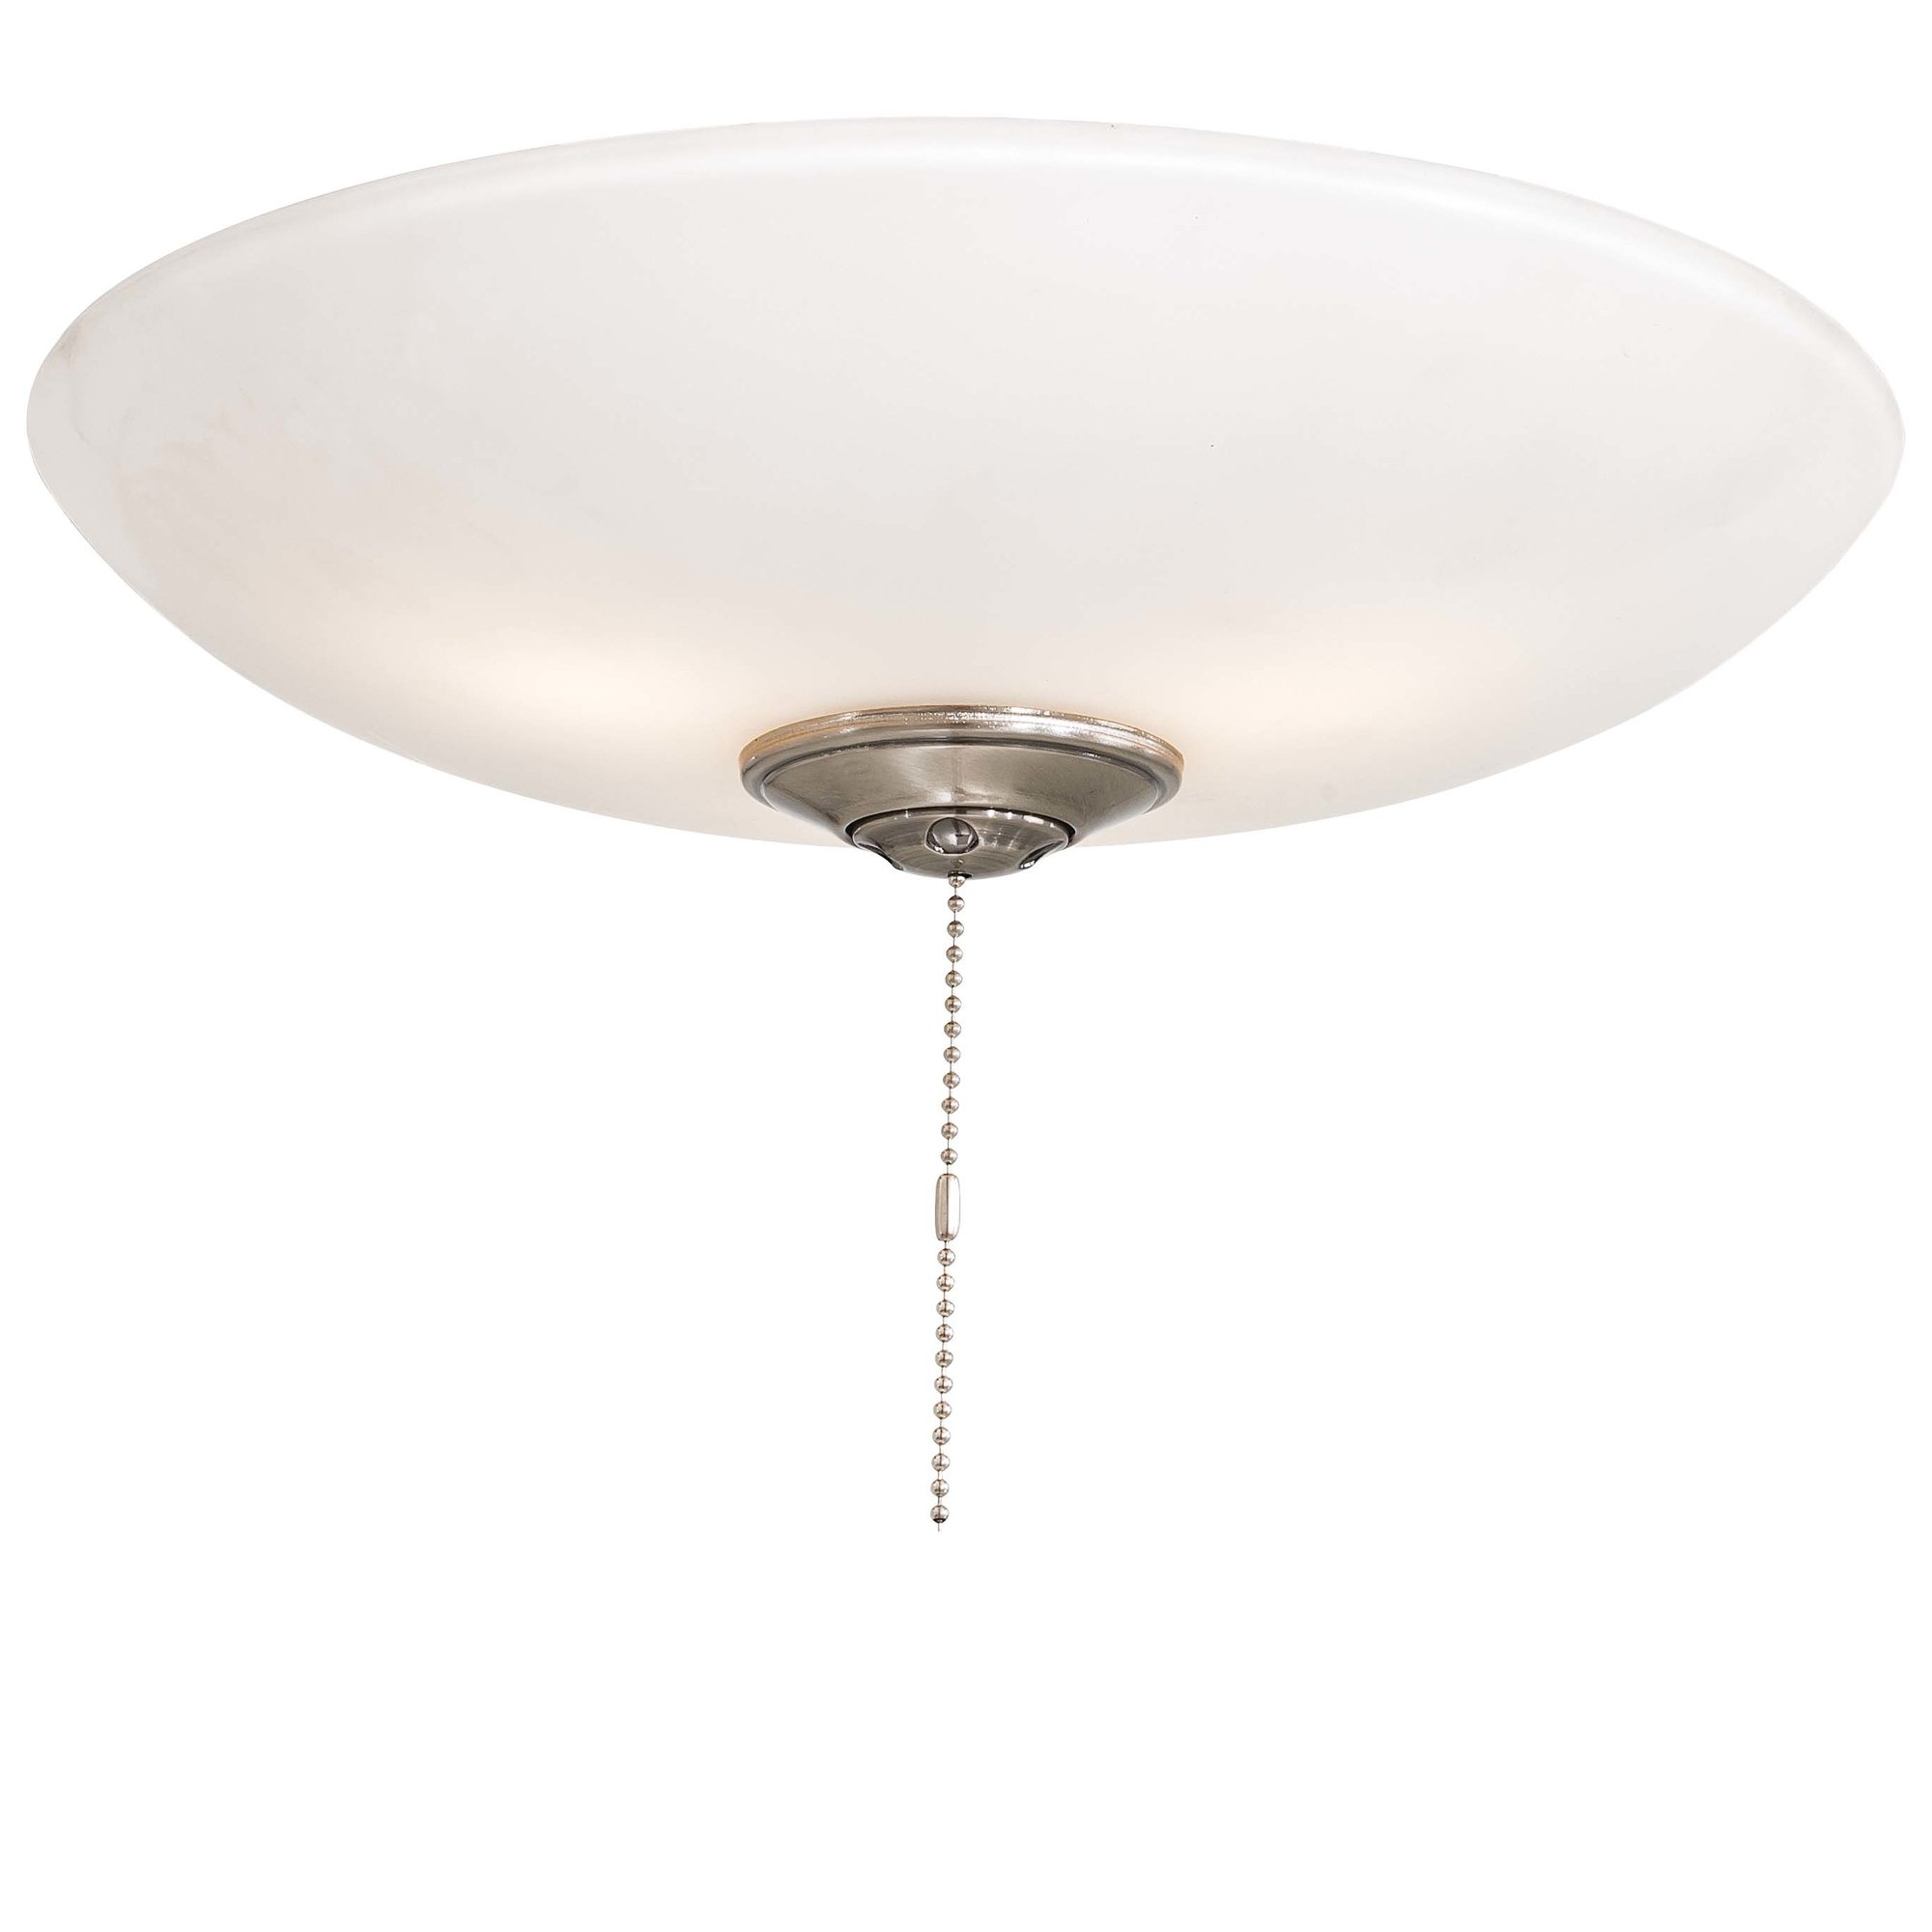 Quorum 5 Light Branched Ceiling Fan Light Kit2000 X 2000